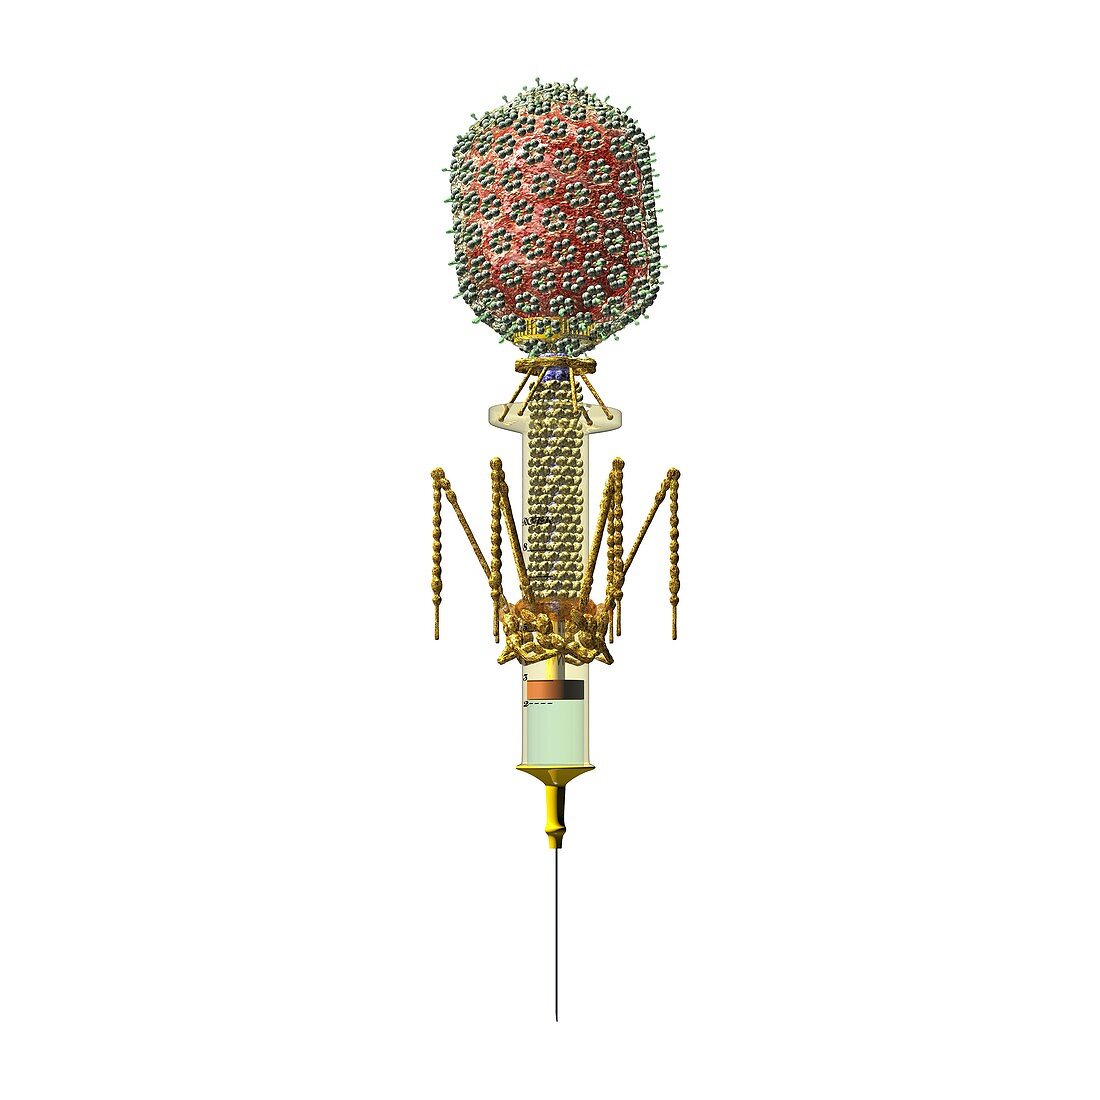 Phage therapy syringe,conceptual image